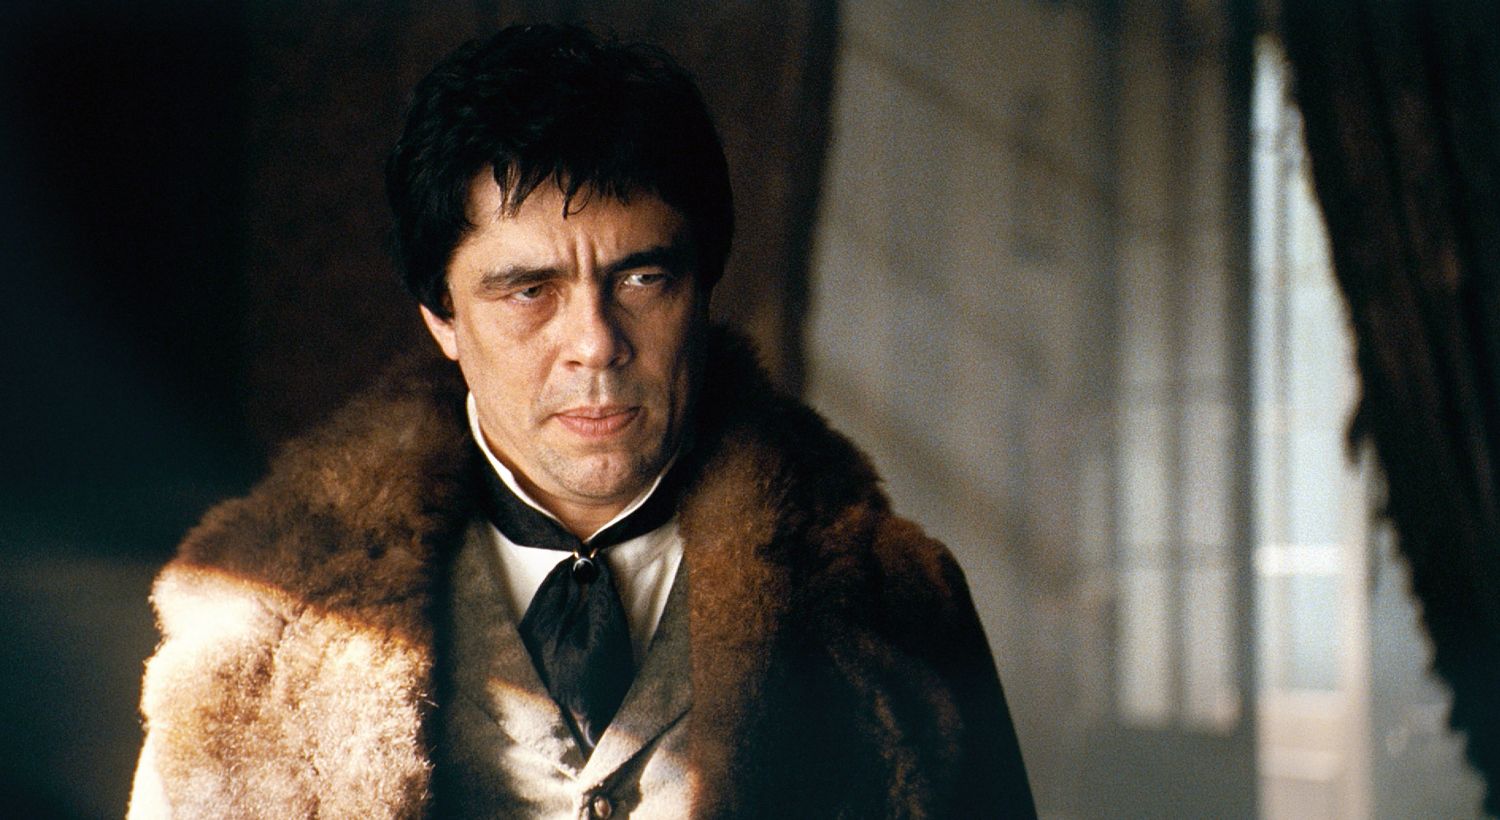 Benicio Del Toro as Lawrence Talbot in The Wolfman (2010)